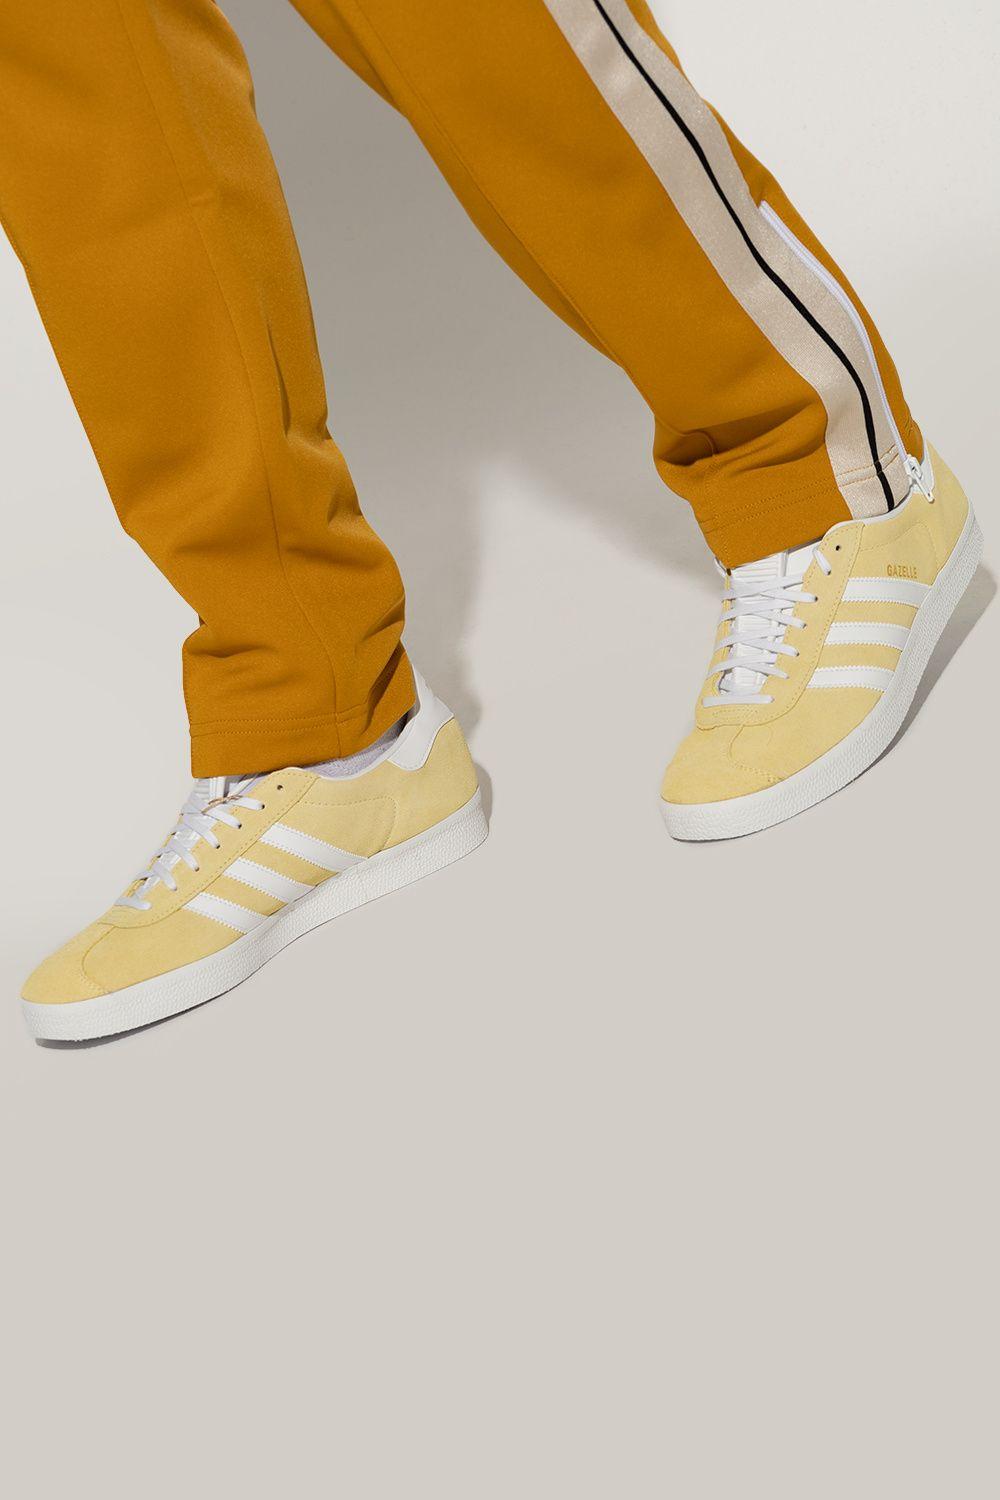 adidas Originals 'gazelle' Sneakers in Yellow | Lyst